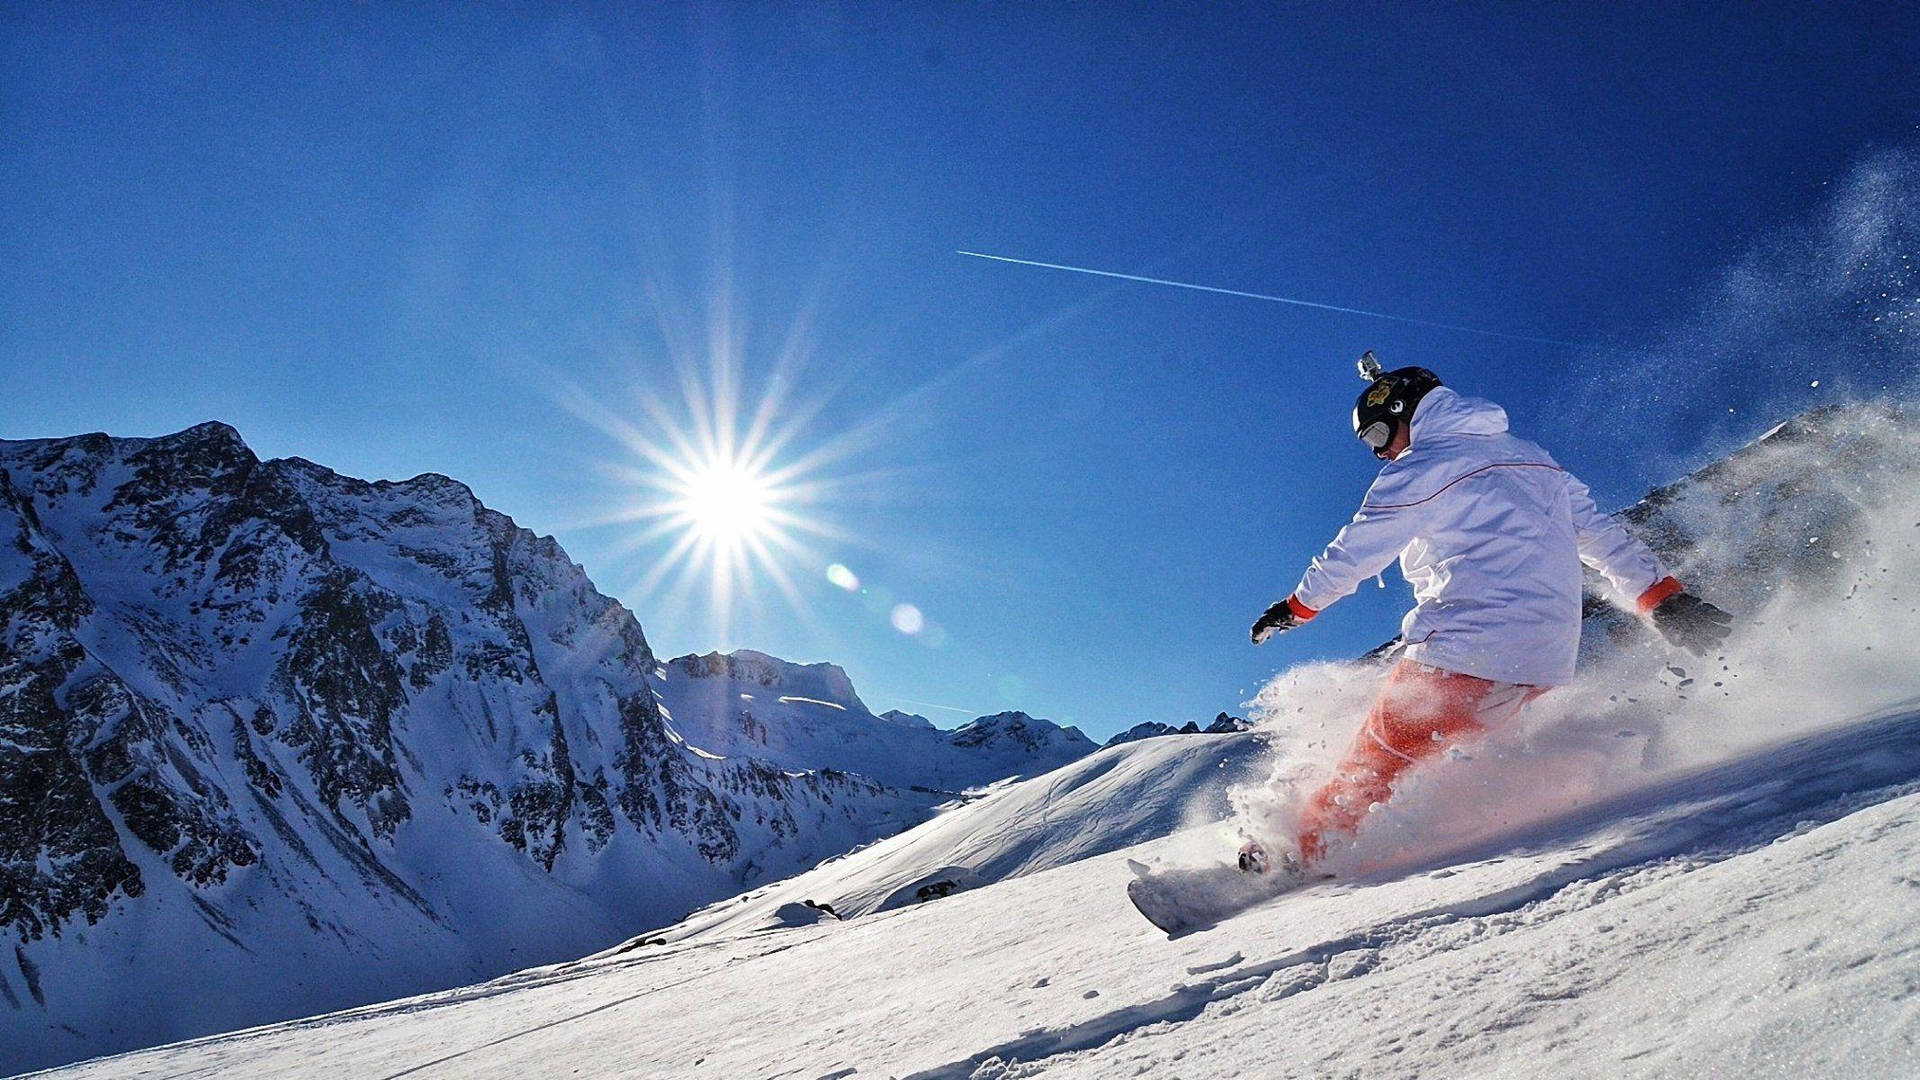 Gopro Snowboarder Going Downhill Wallpaper